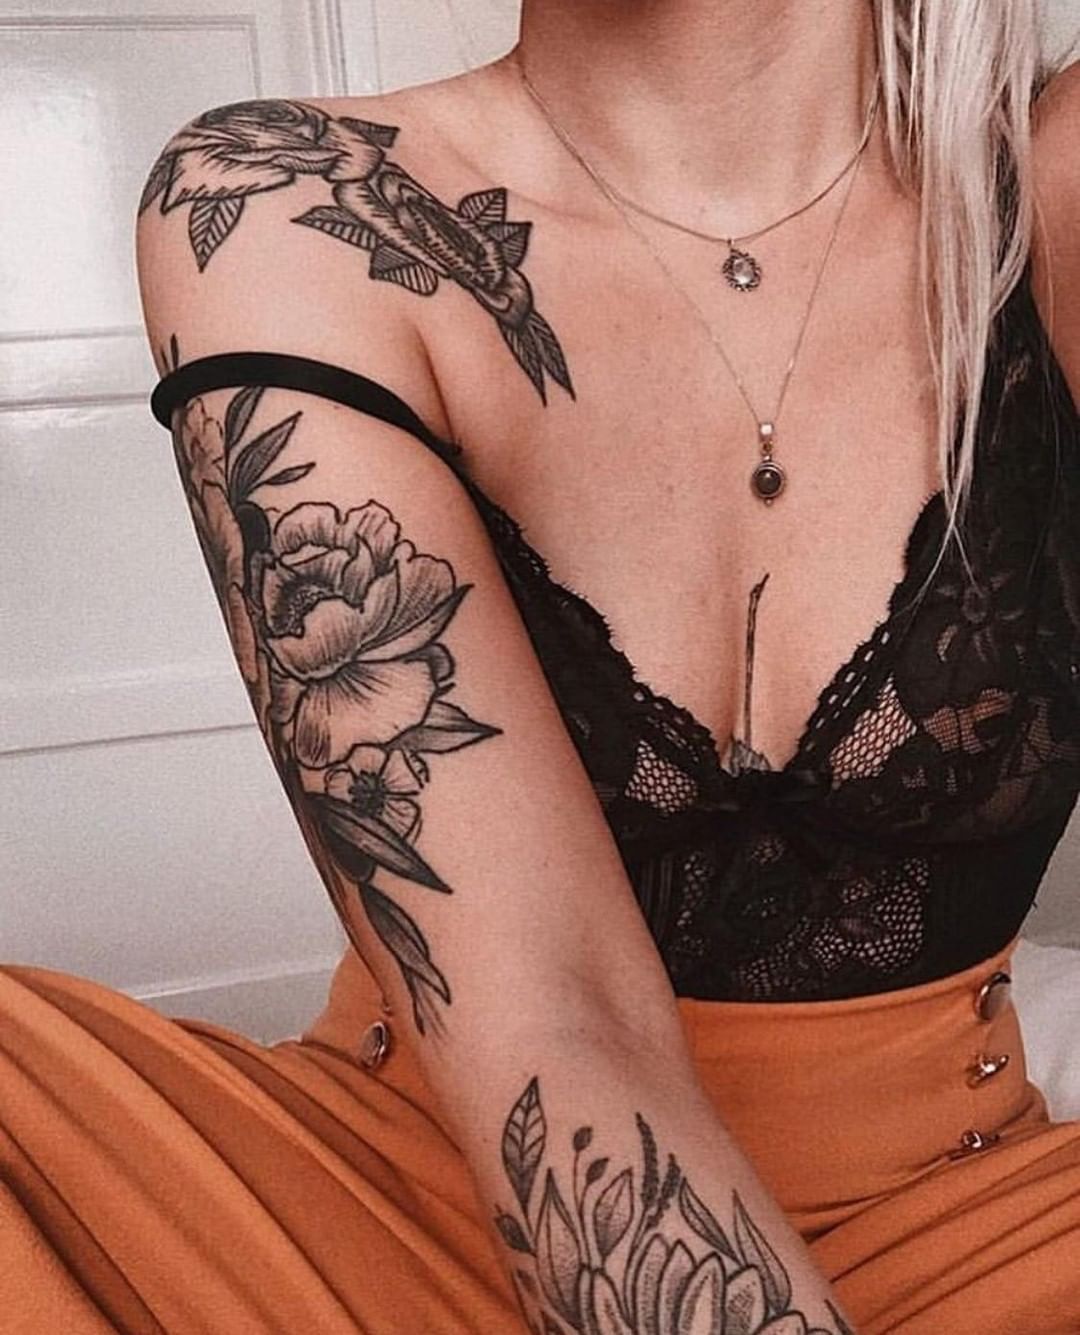 Female Wrist Tattoo Ideas Small Designs (13)